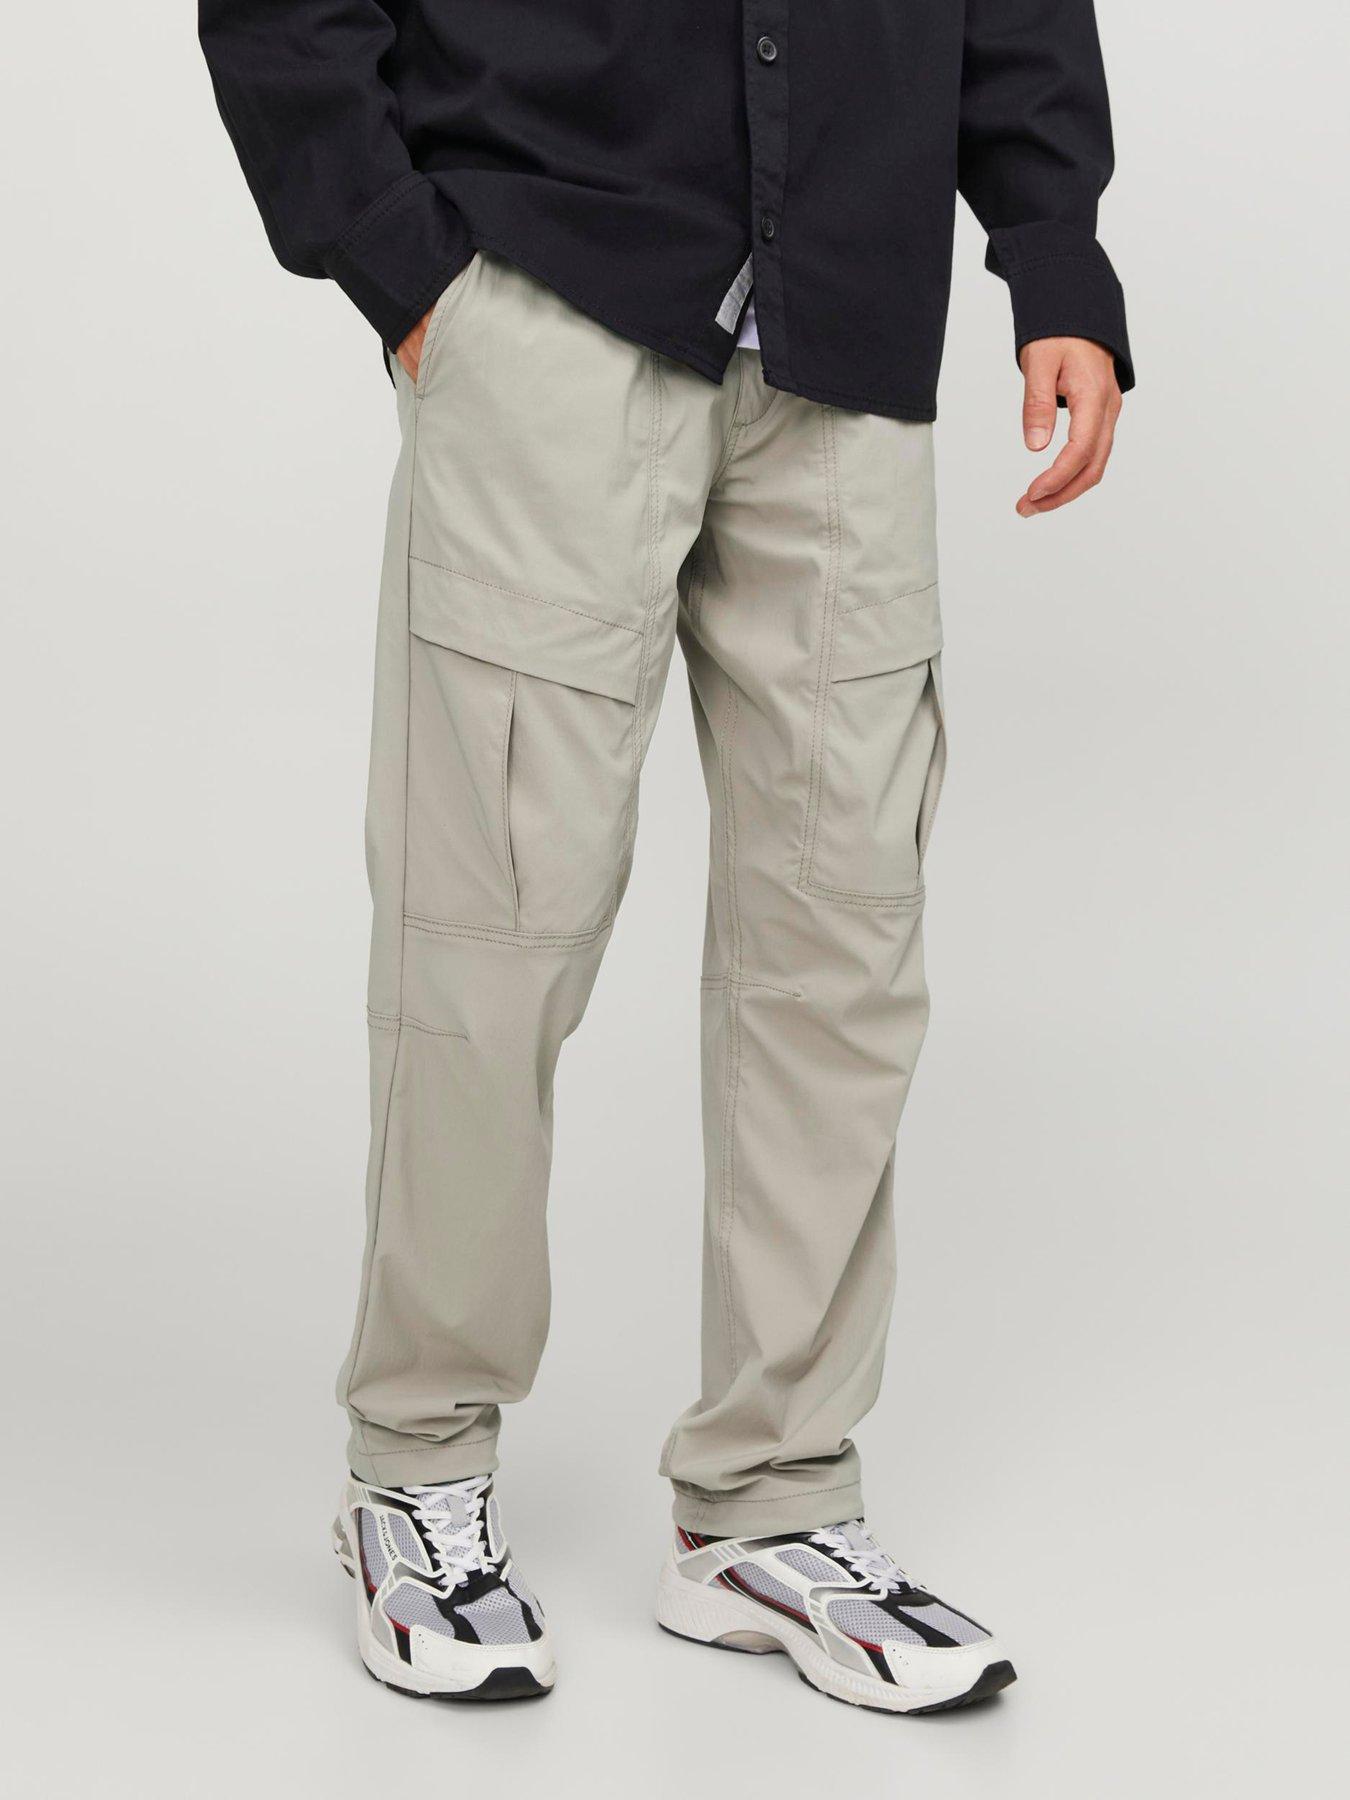 Regular Fit Ripstop Cargo Pants - Khaki green/patterned - Men